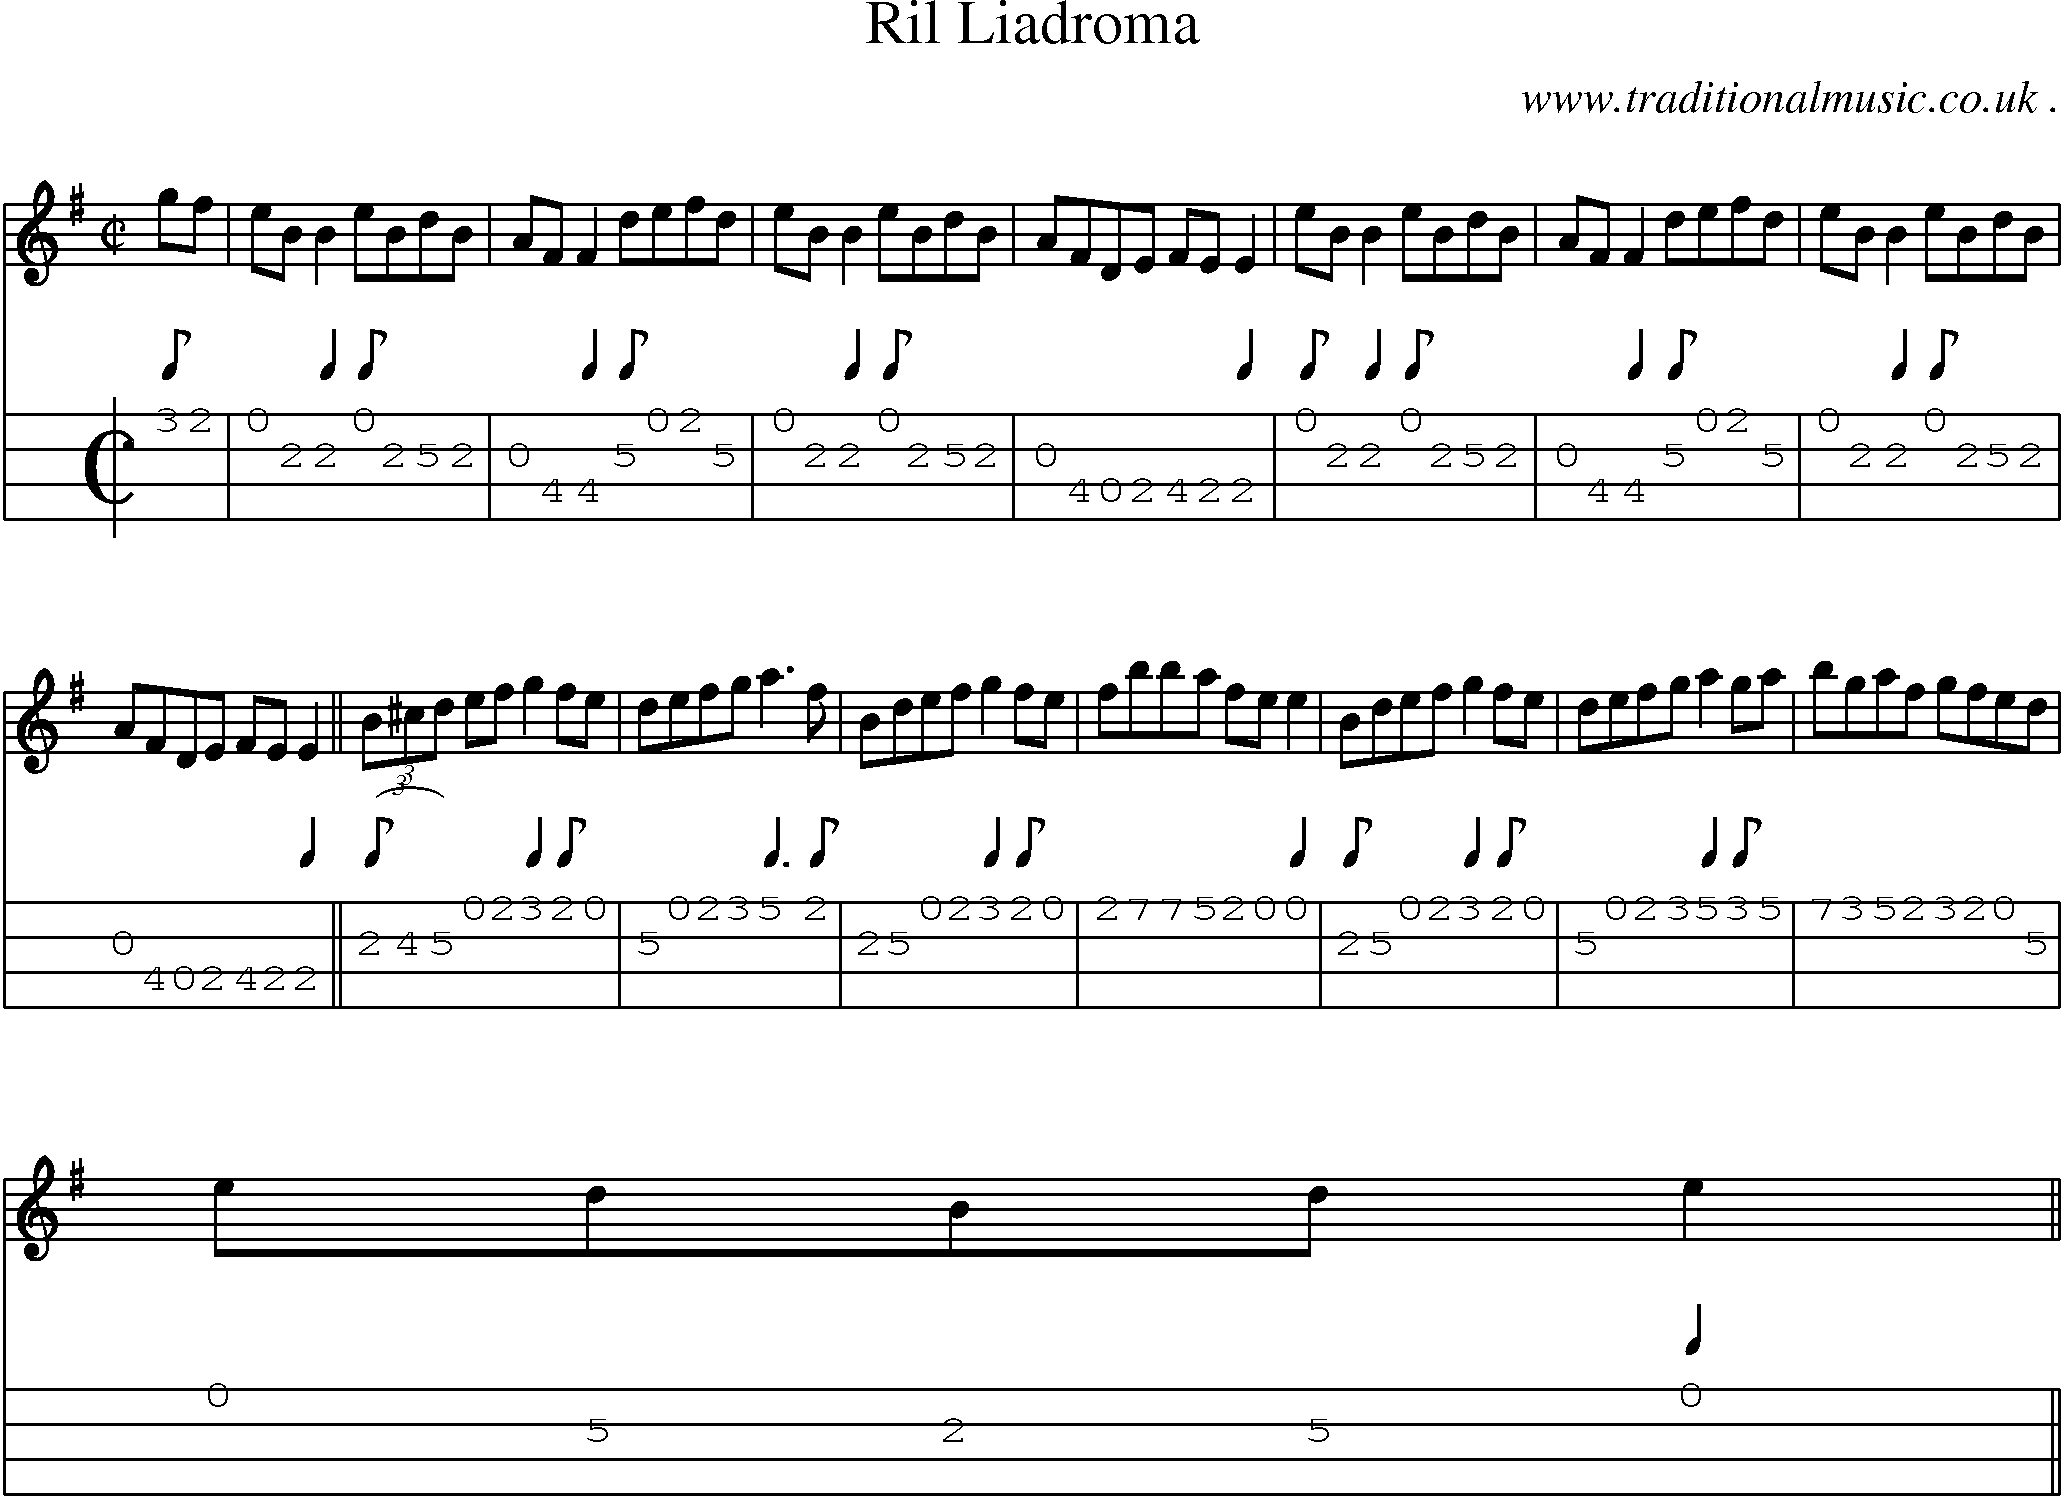 Sheet-Music and Mandolin Tabs for Ril Liadroma